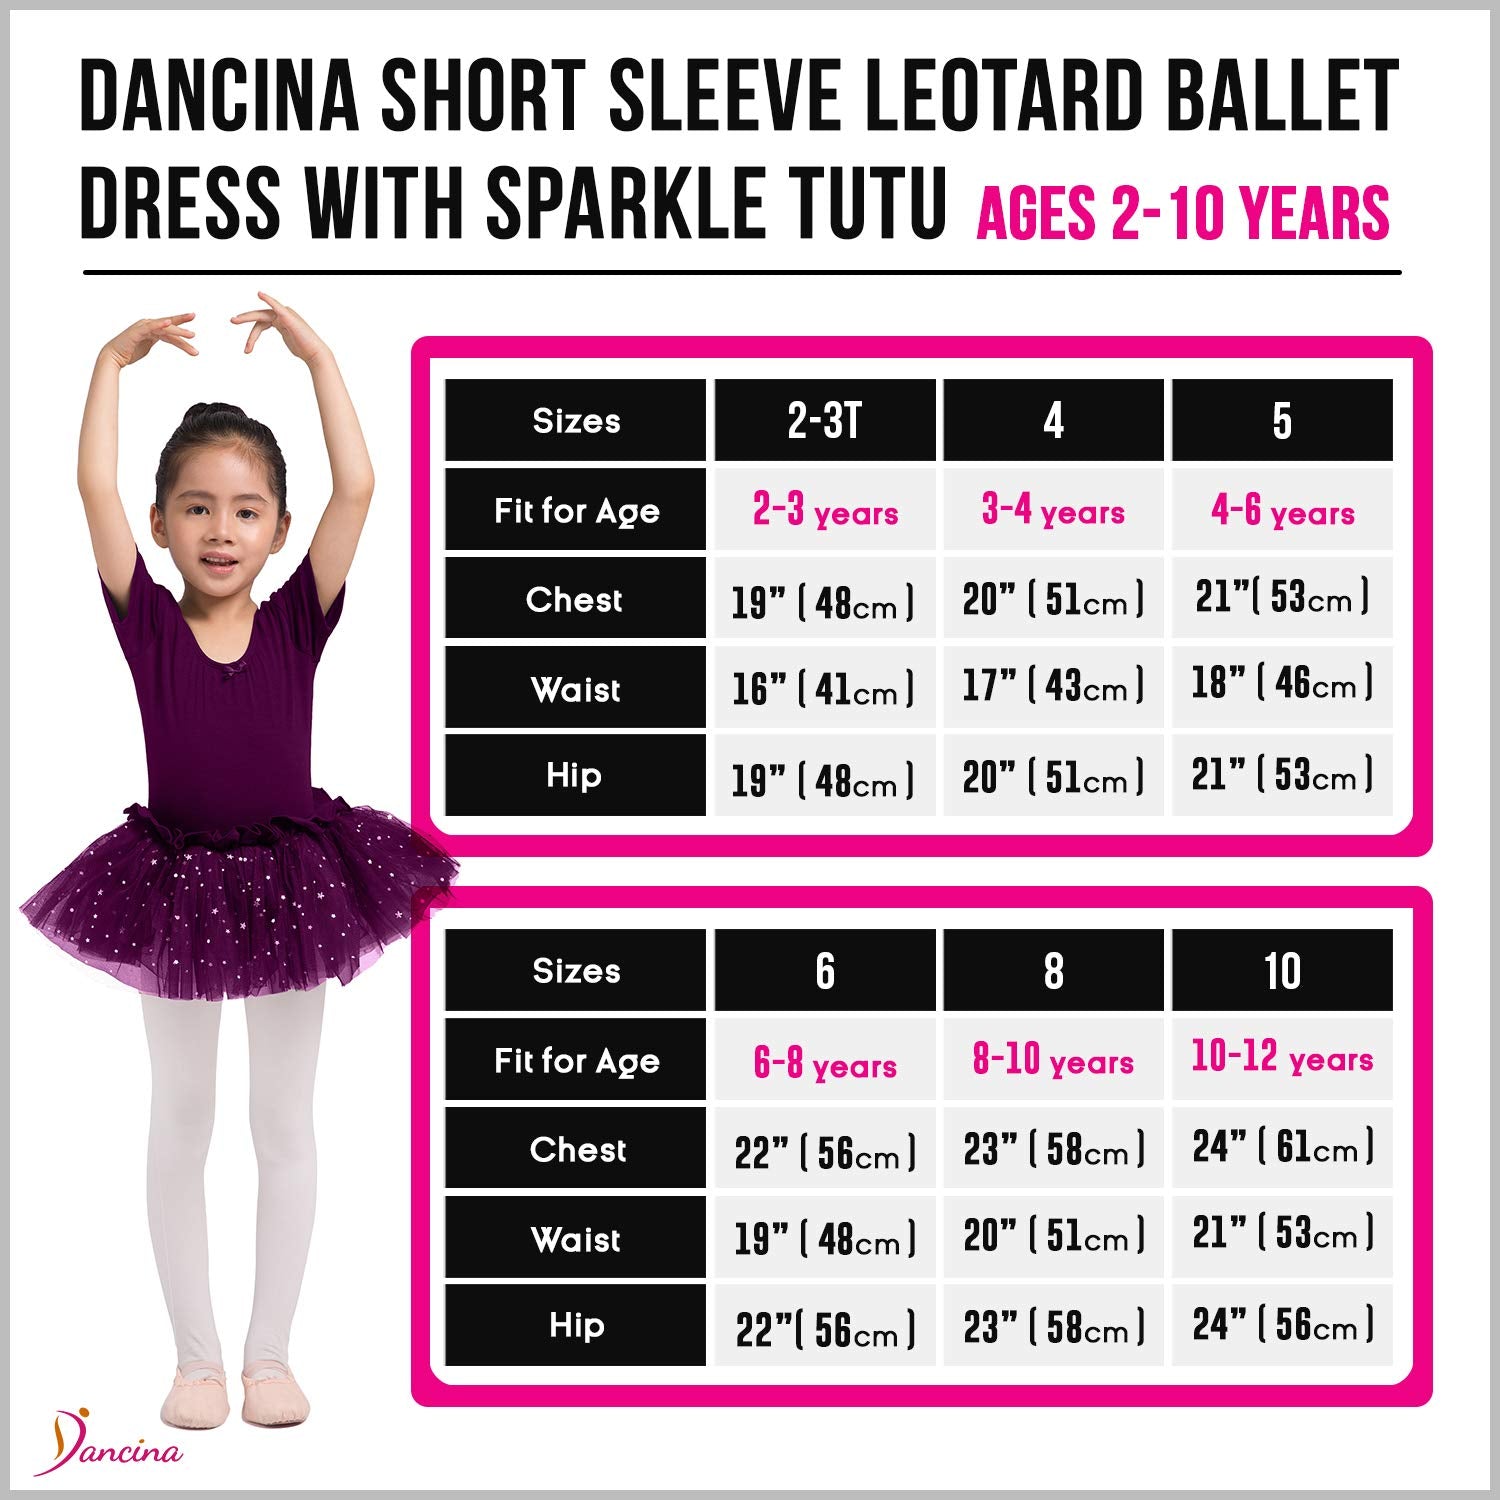 Dancina Leotard Sparkle Tutu Dress Short Sleeve Size Chart